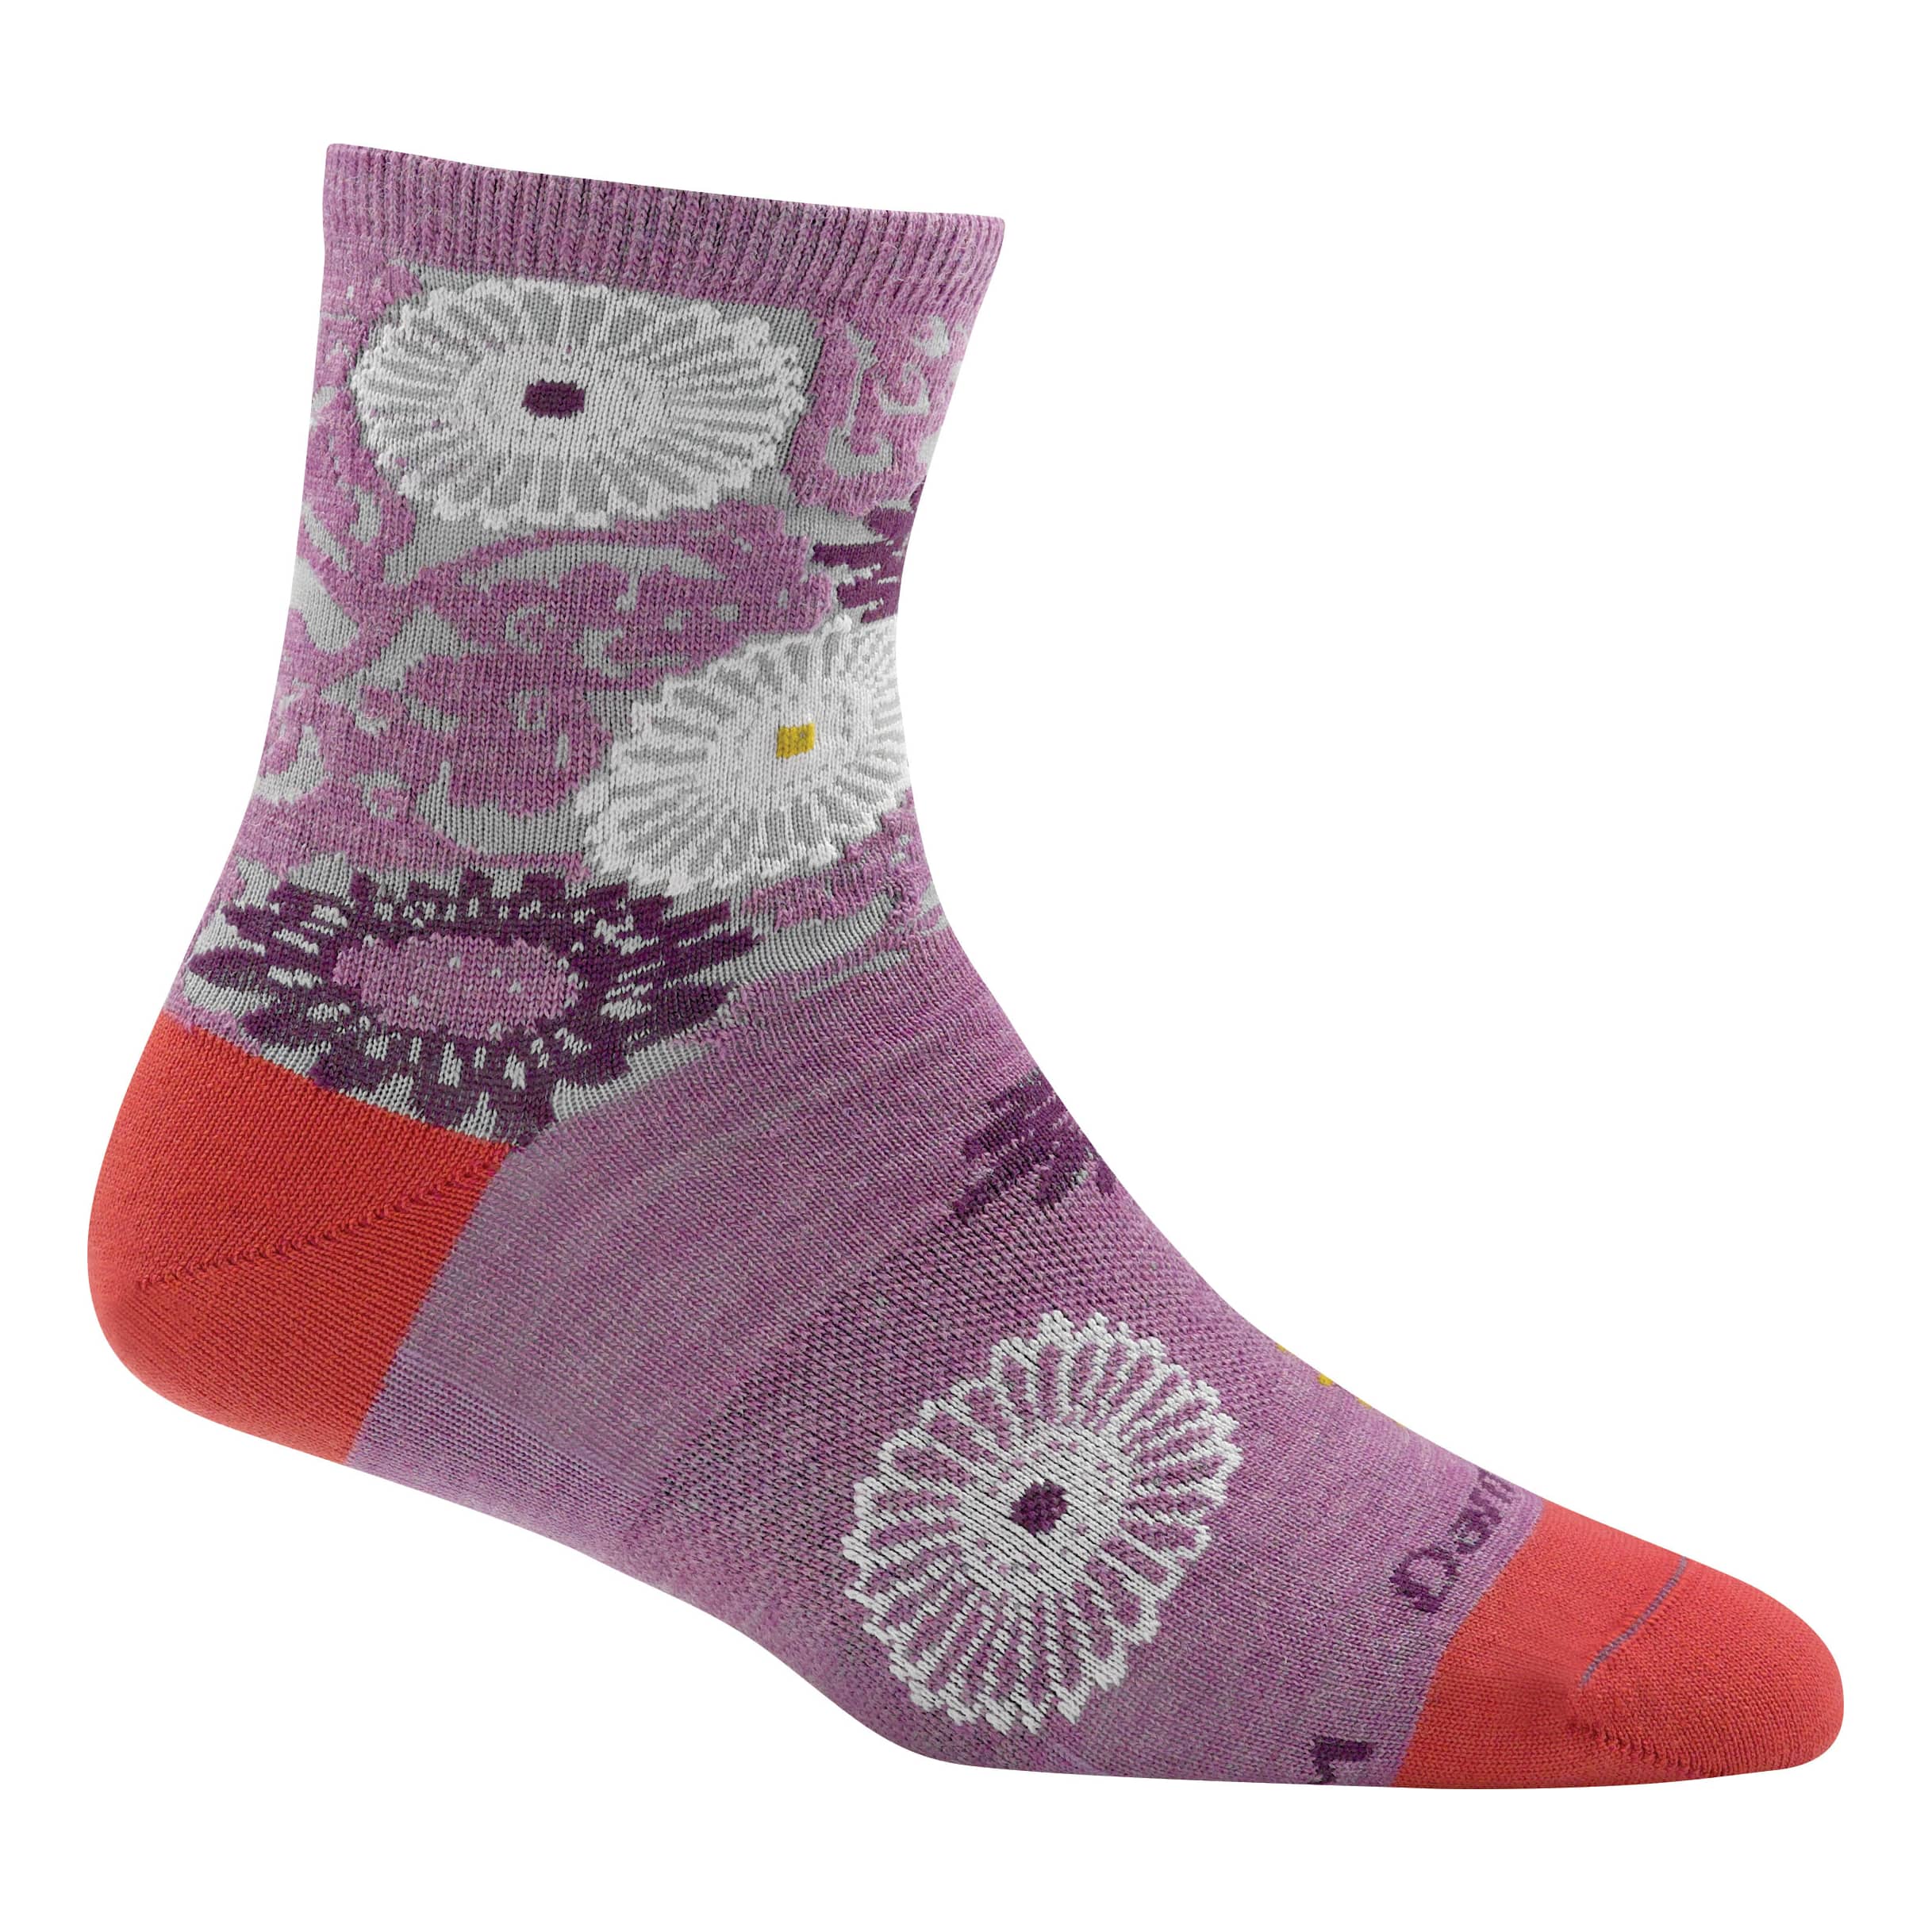 Darn Tough Women's Floral Shorty Light Socks - Violet